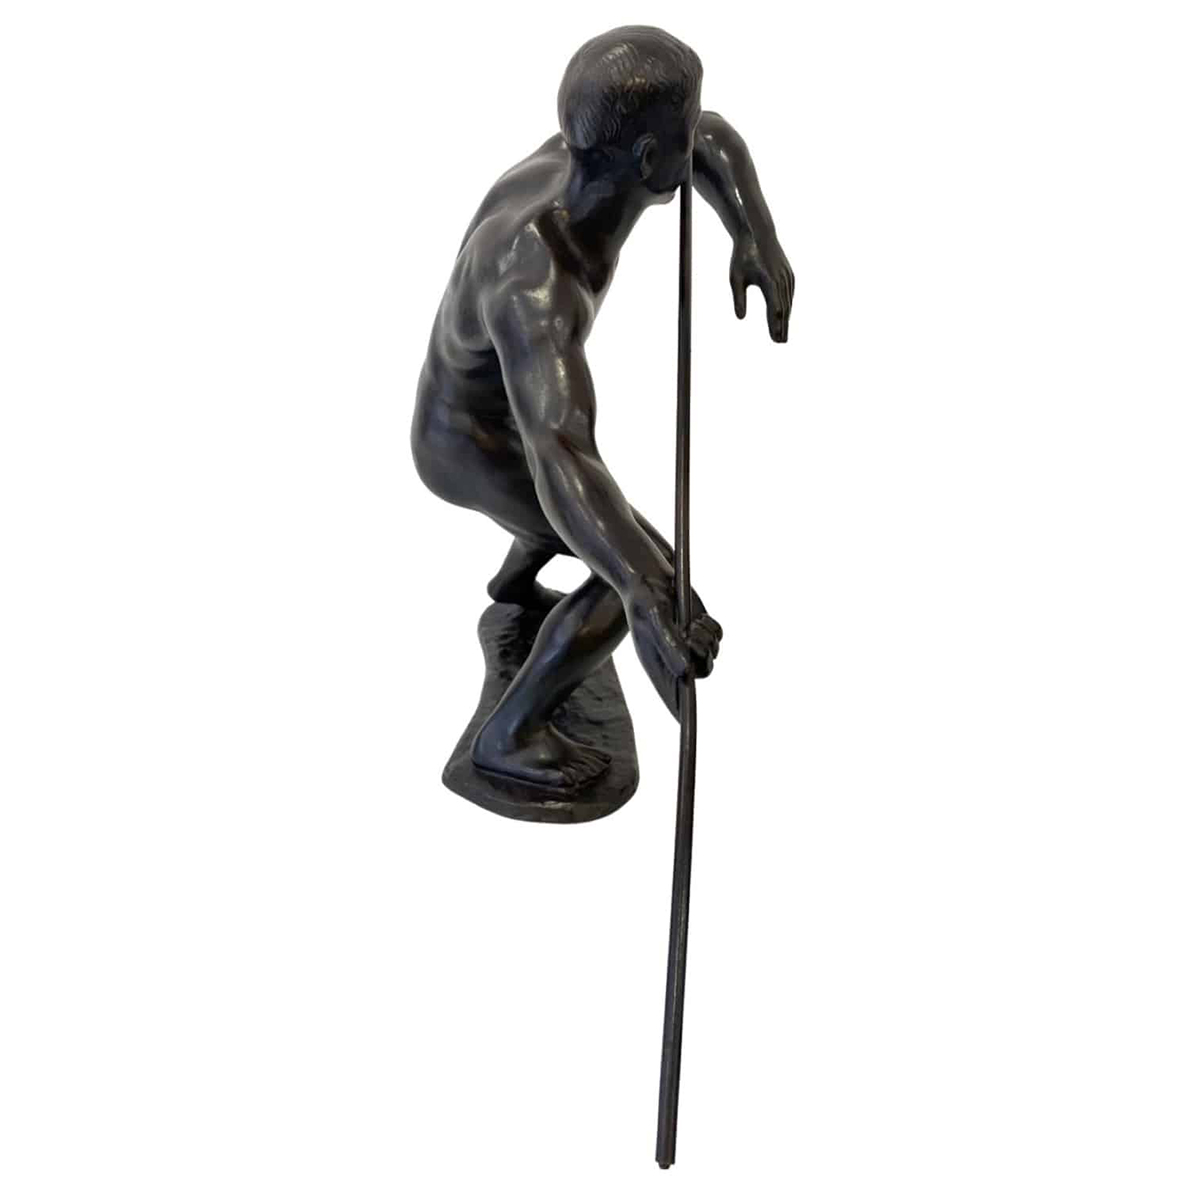 Javelin Thrower Statue